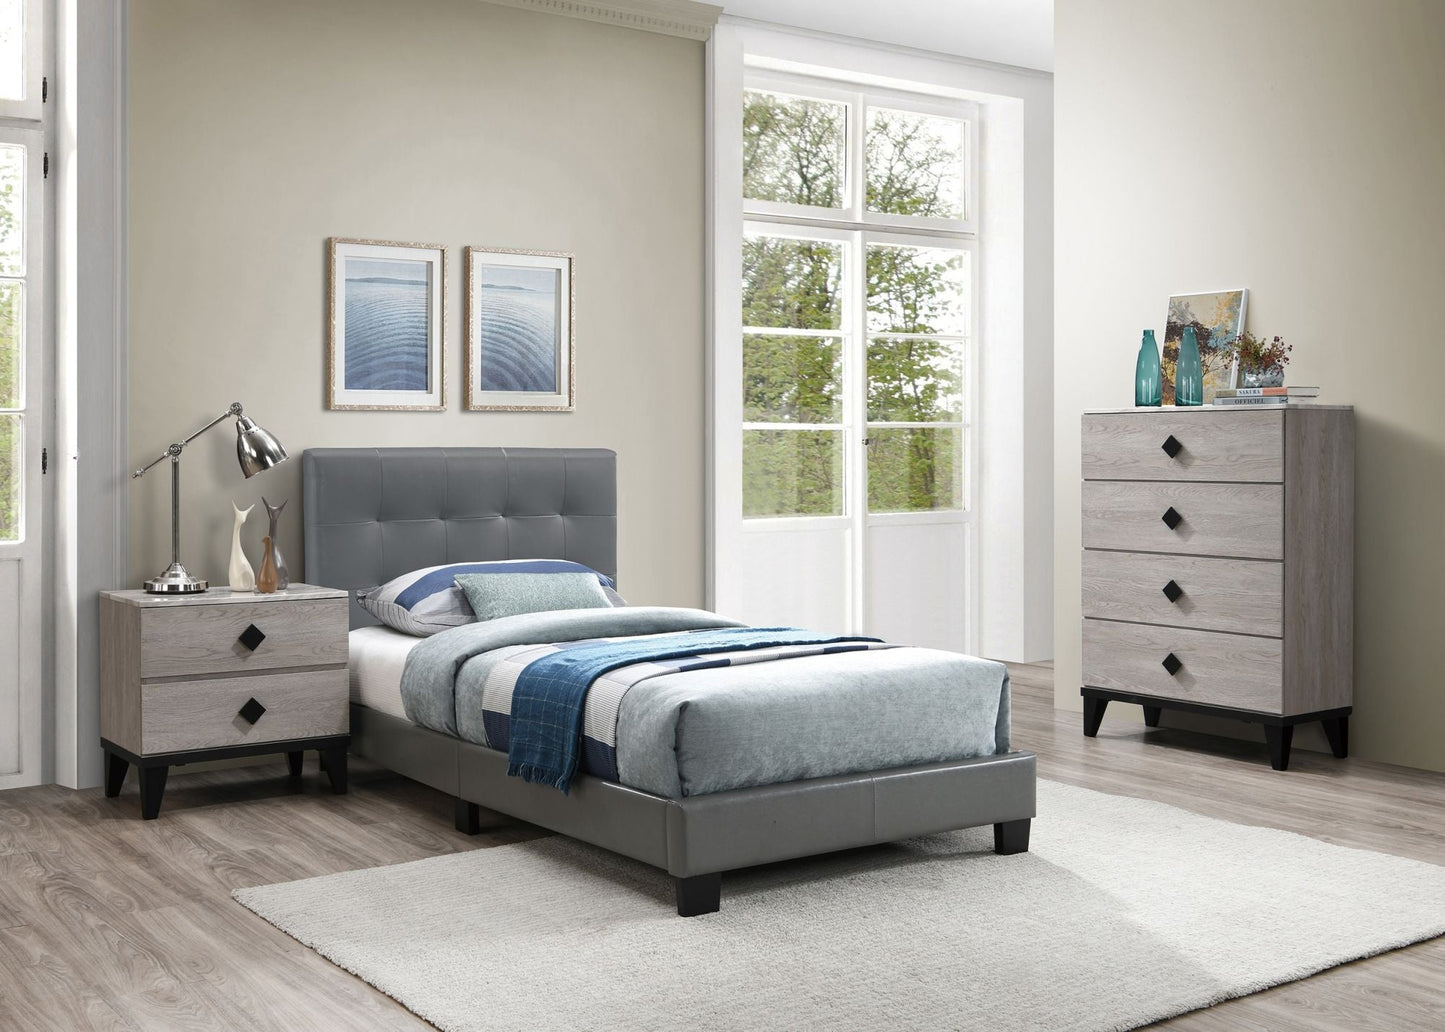 Bedroom Furniture Contemporary Look Cream Color Home Decor by Design